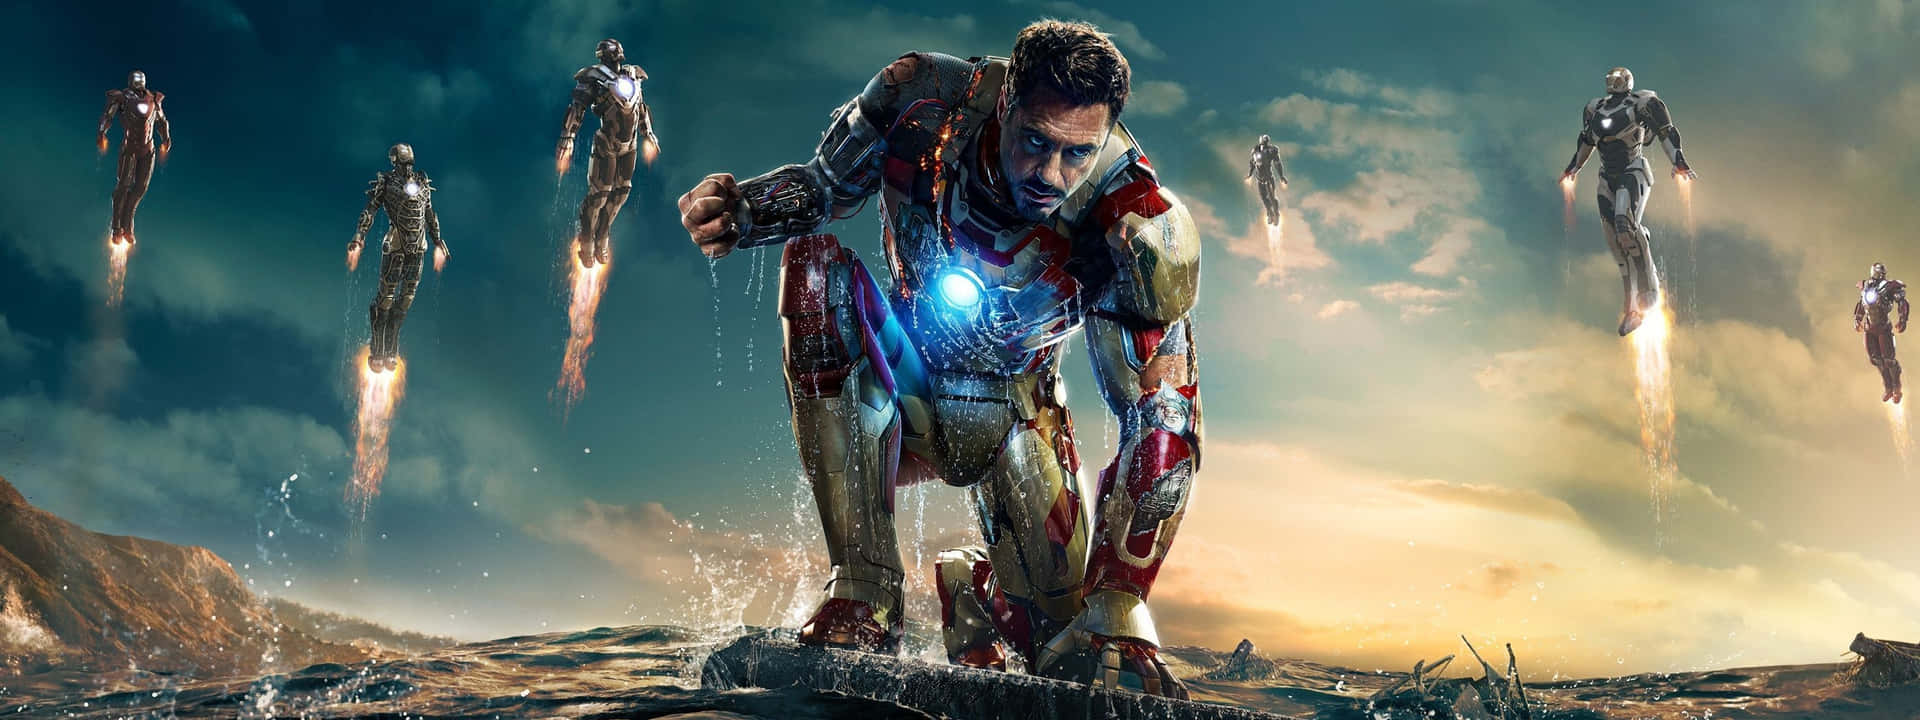 Iron Man 3 Hd Wallpapers Wallpaper